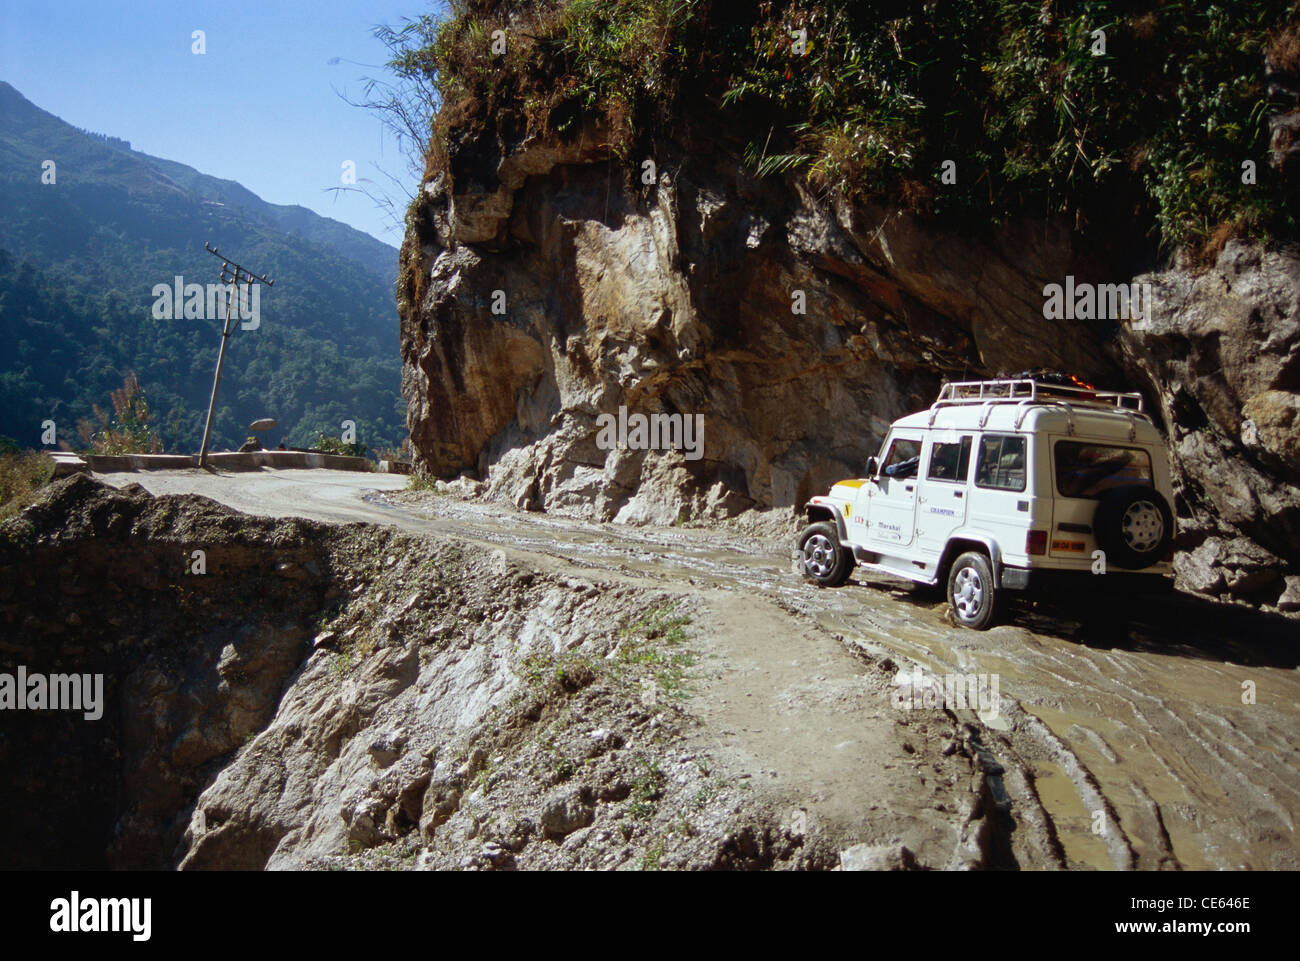 http://c8.alamy.com/comp/CE646E/four-wheel-drive-car-on-mountain-road-to-lachung-sikkim-india-CE646E.jpg